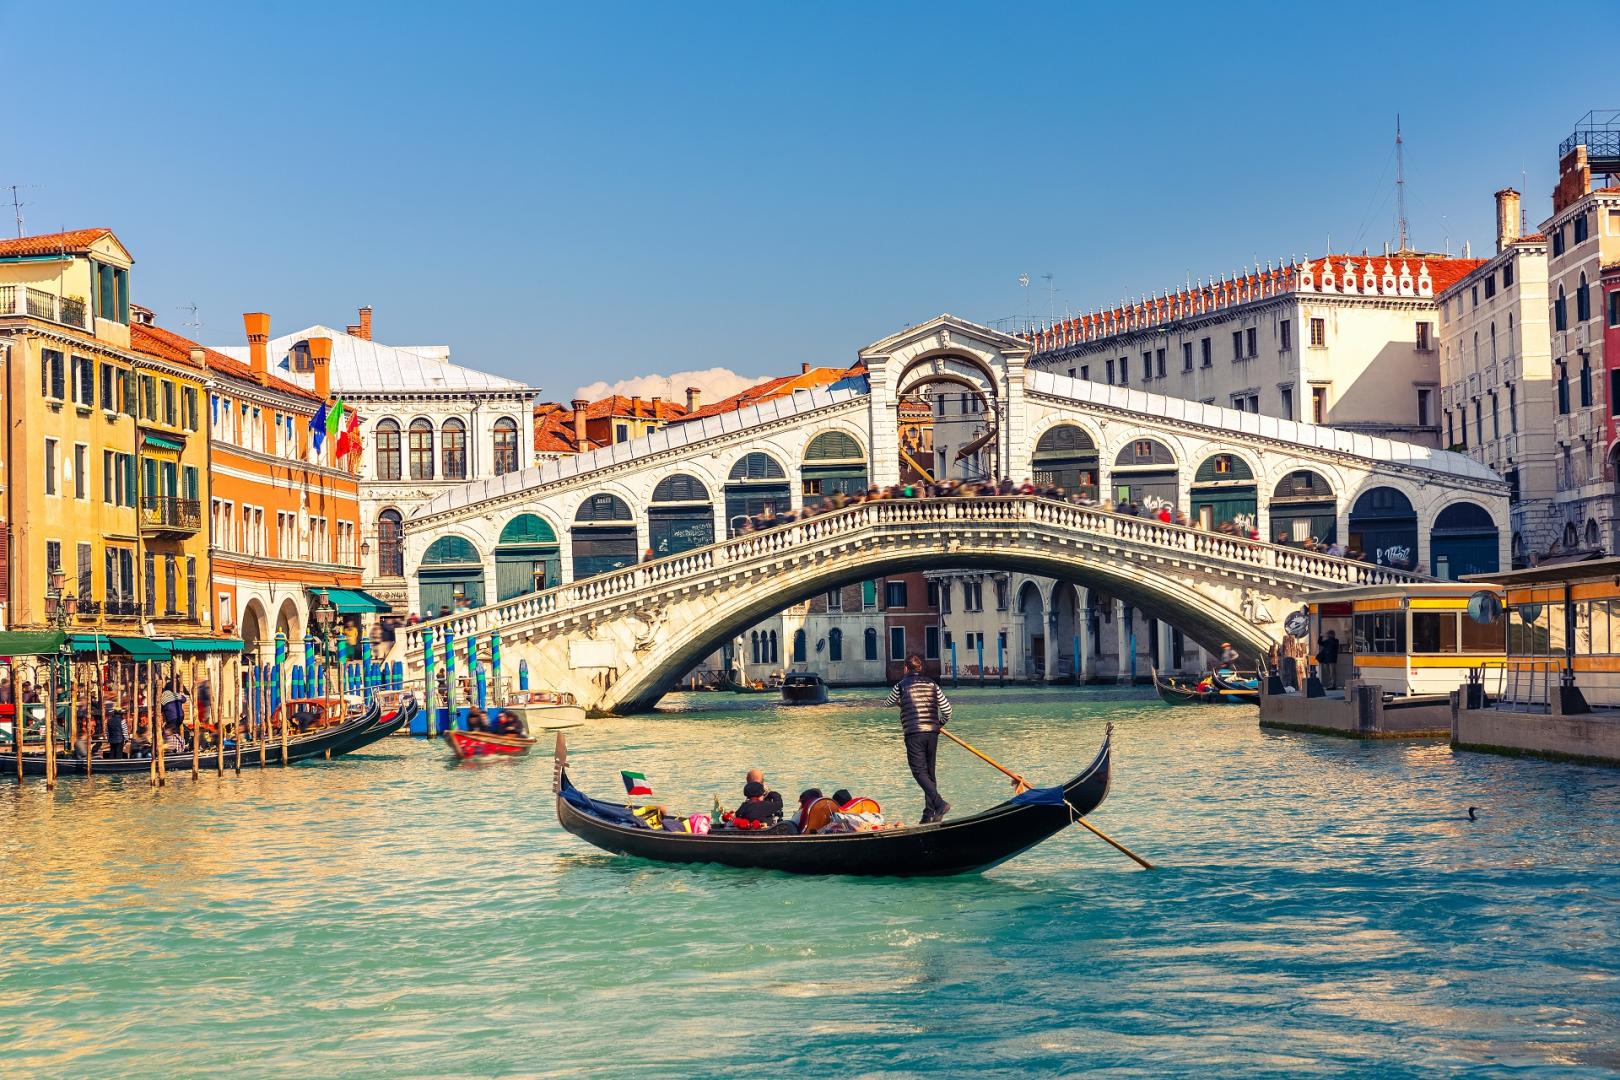 Rialtobrücke Venedig - Venedig gehört zu den romantischsten Städten Europas